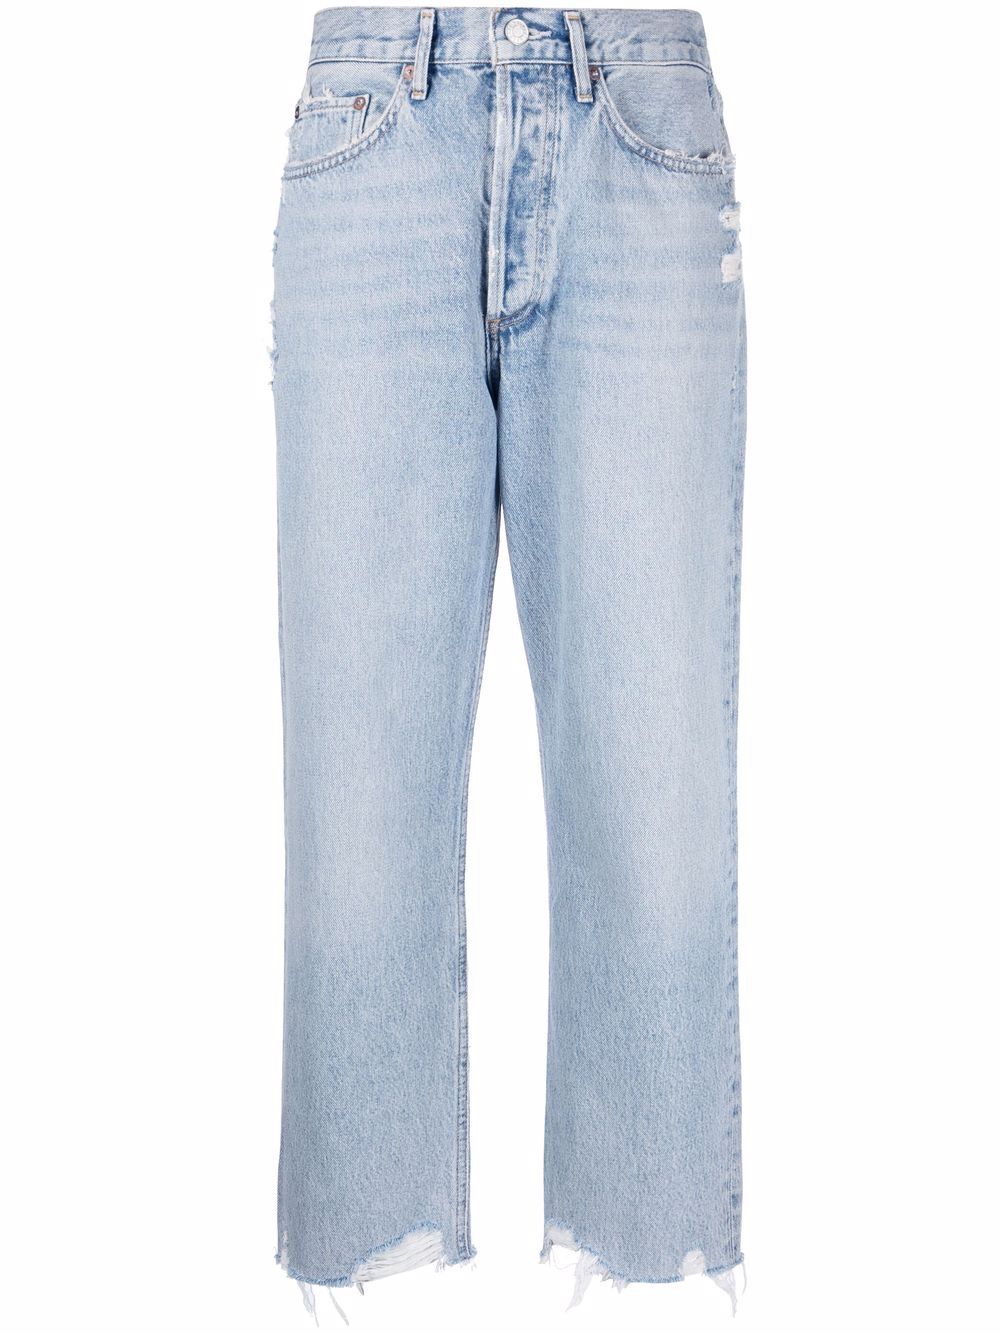 AGOLDE Cropped-Jeans im 90s-Style - Blau von AGOLDE